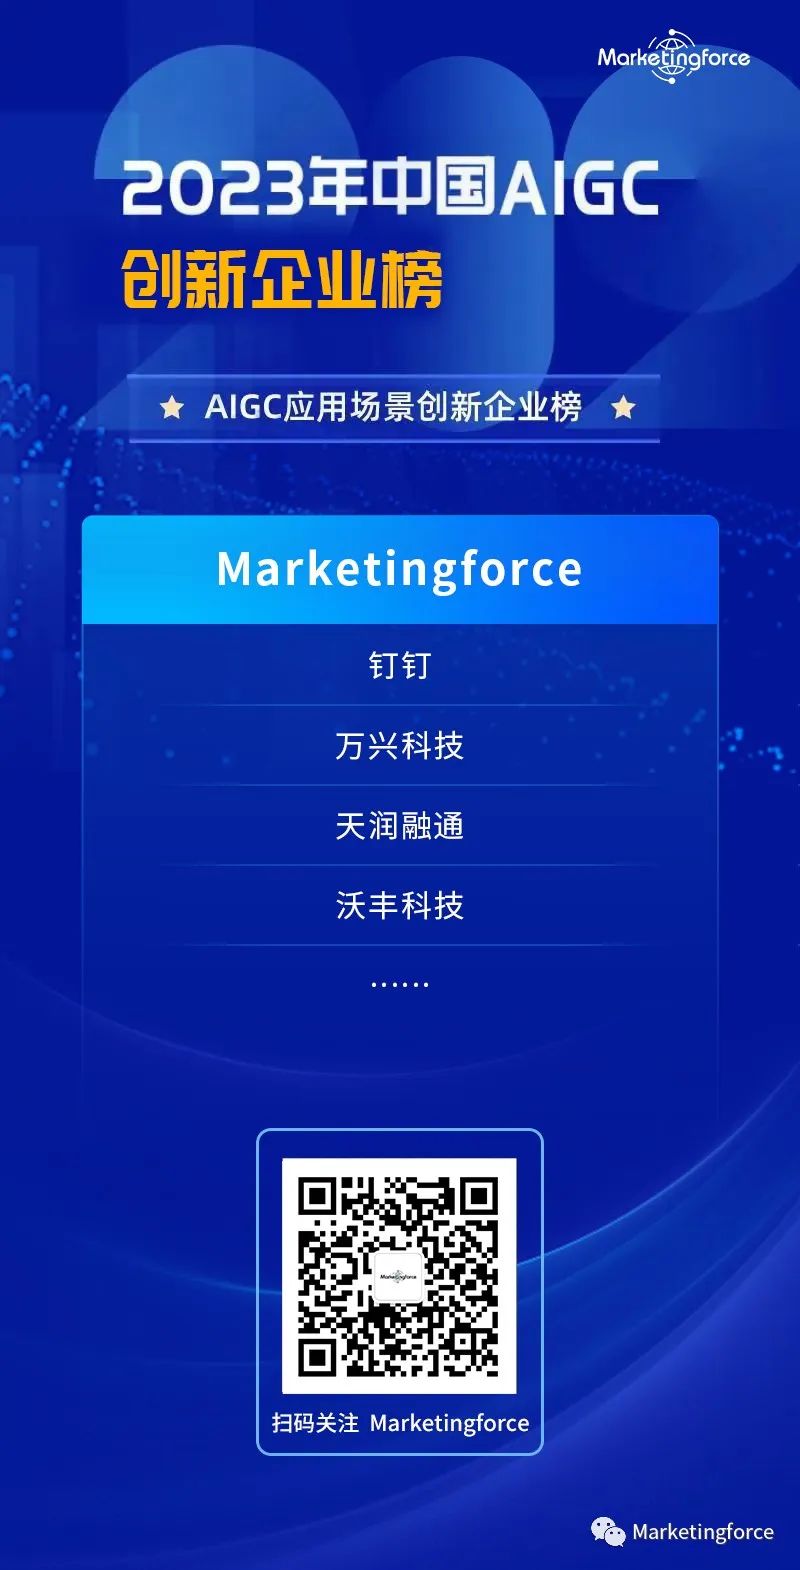 Marketingforce成功入选【AIGC应用场景创新企业榜】